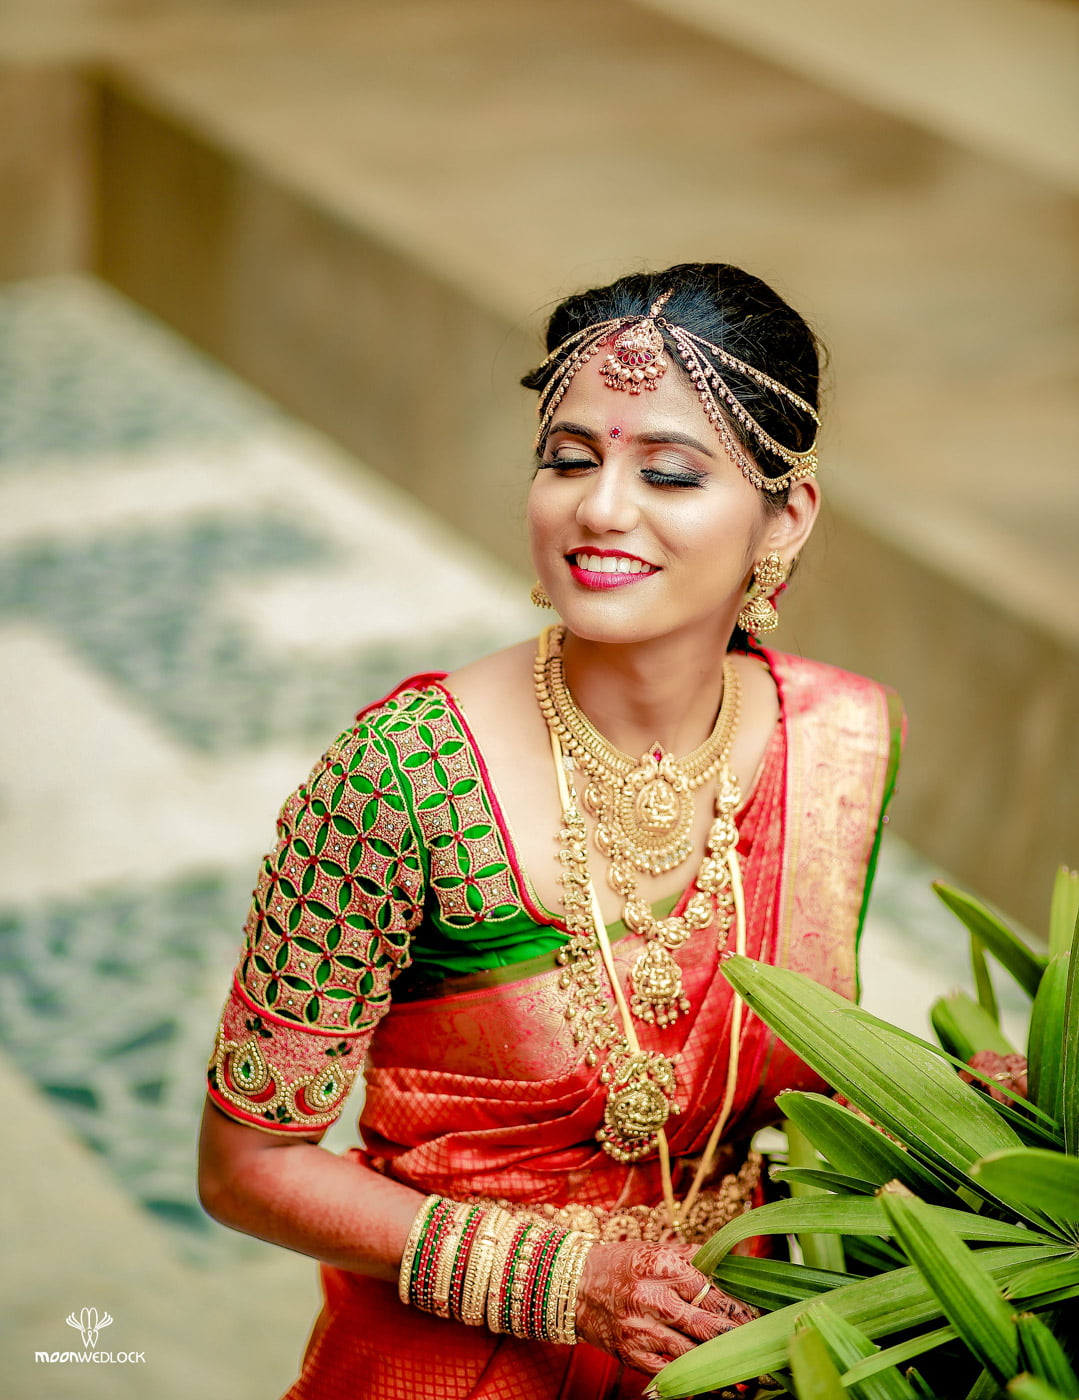 Best Tamil Wedding Photography of Harishini & Vimal by Moonwedlock ...